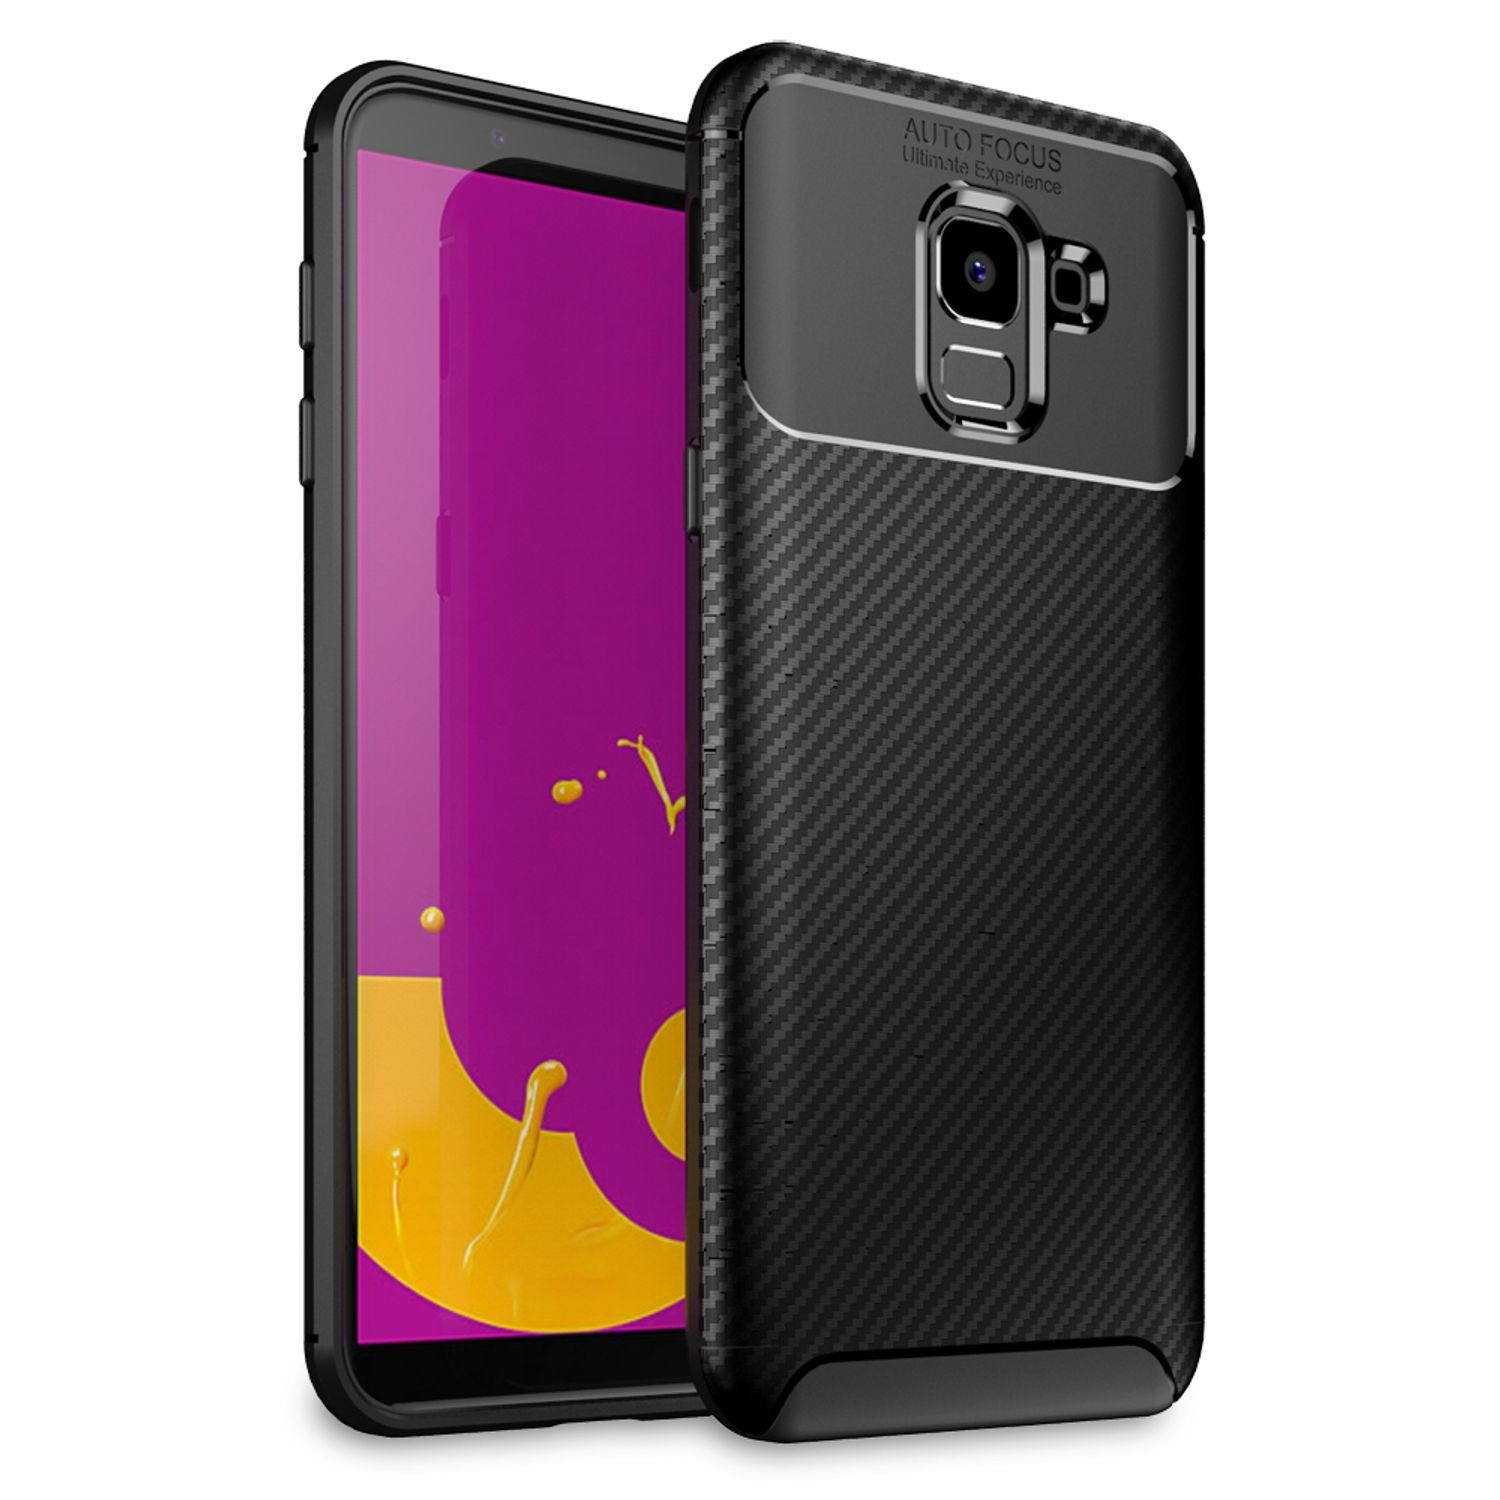 Nalia Smartphone-Hülle Samsung Galaxy J6, Carbon Look Silikon Hülle / Matt Schwarz / Rutschfest / Karbon Optik